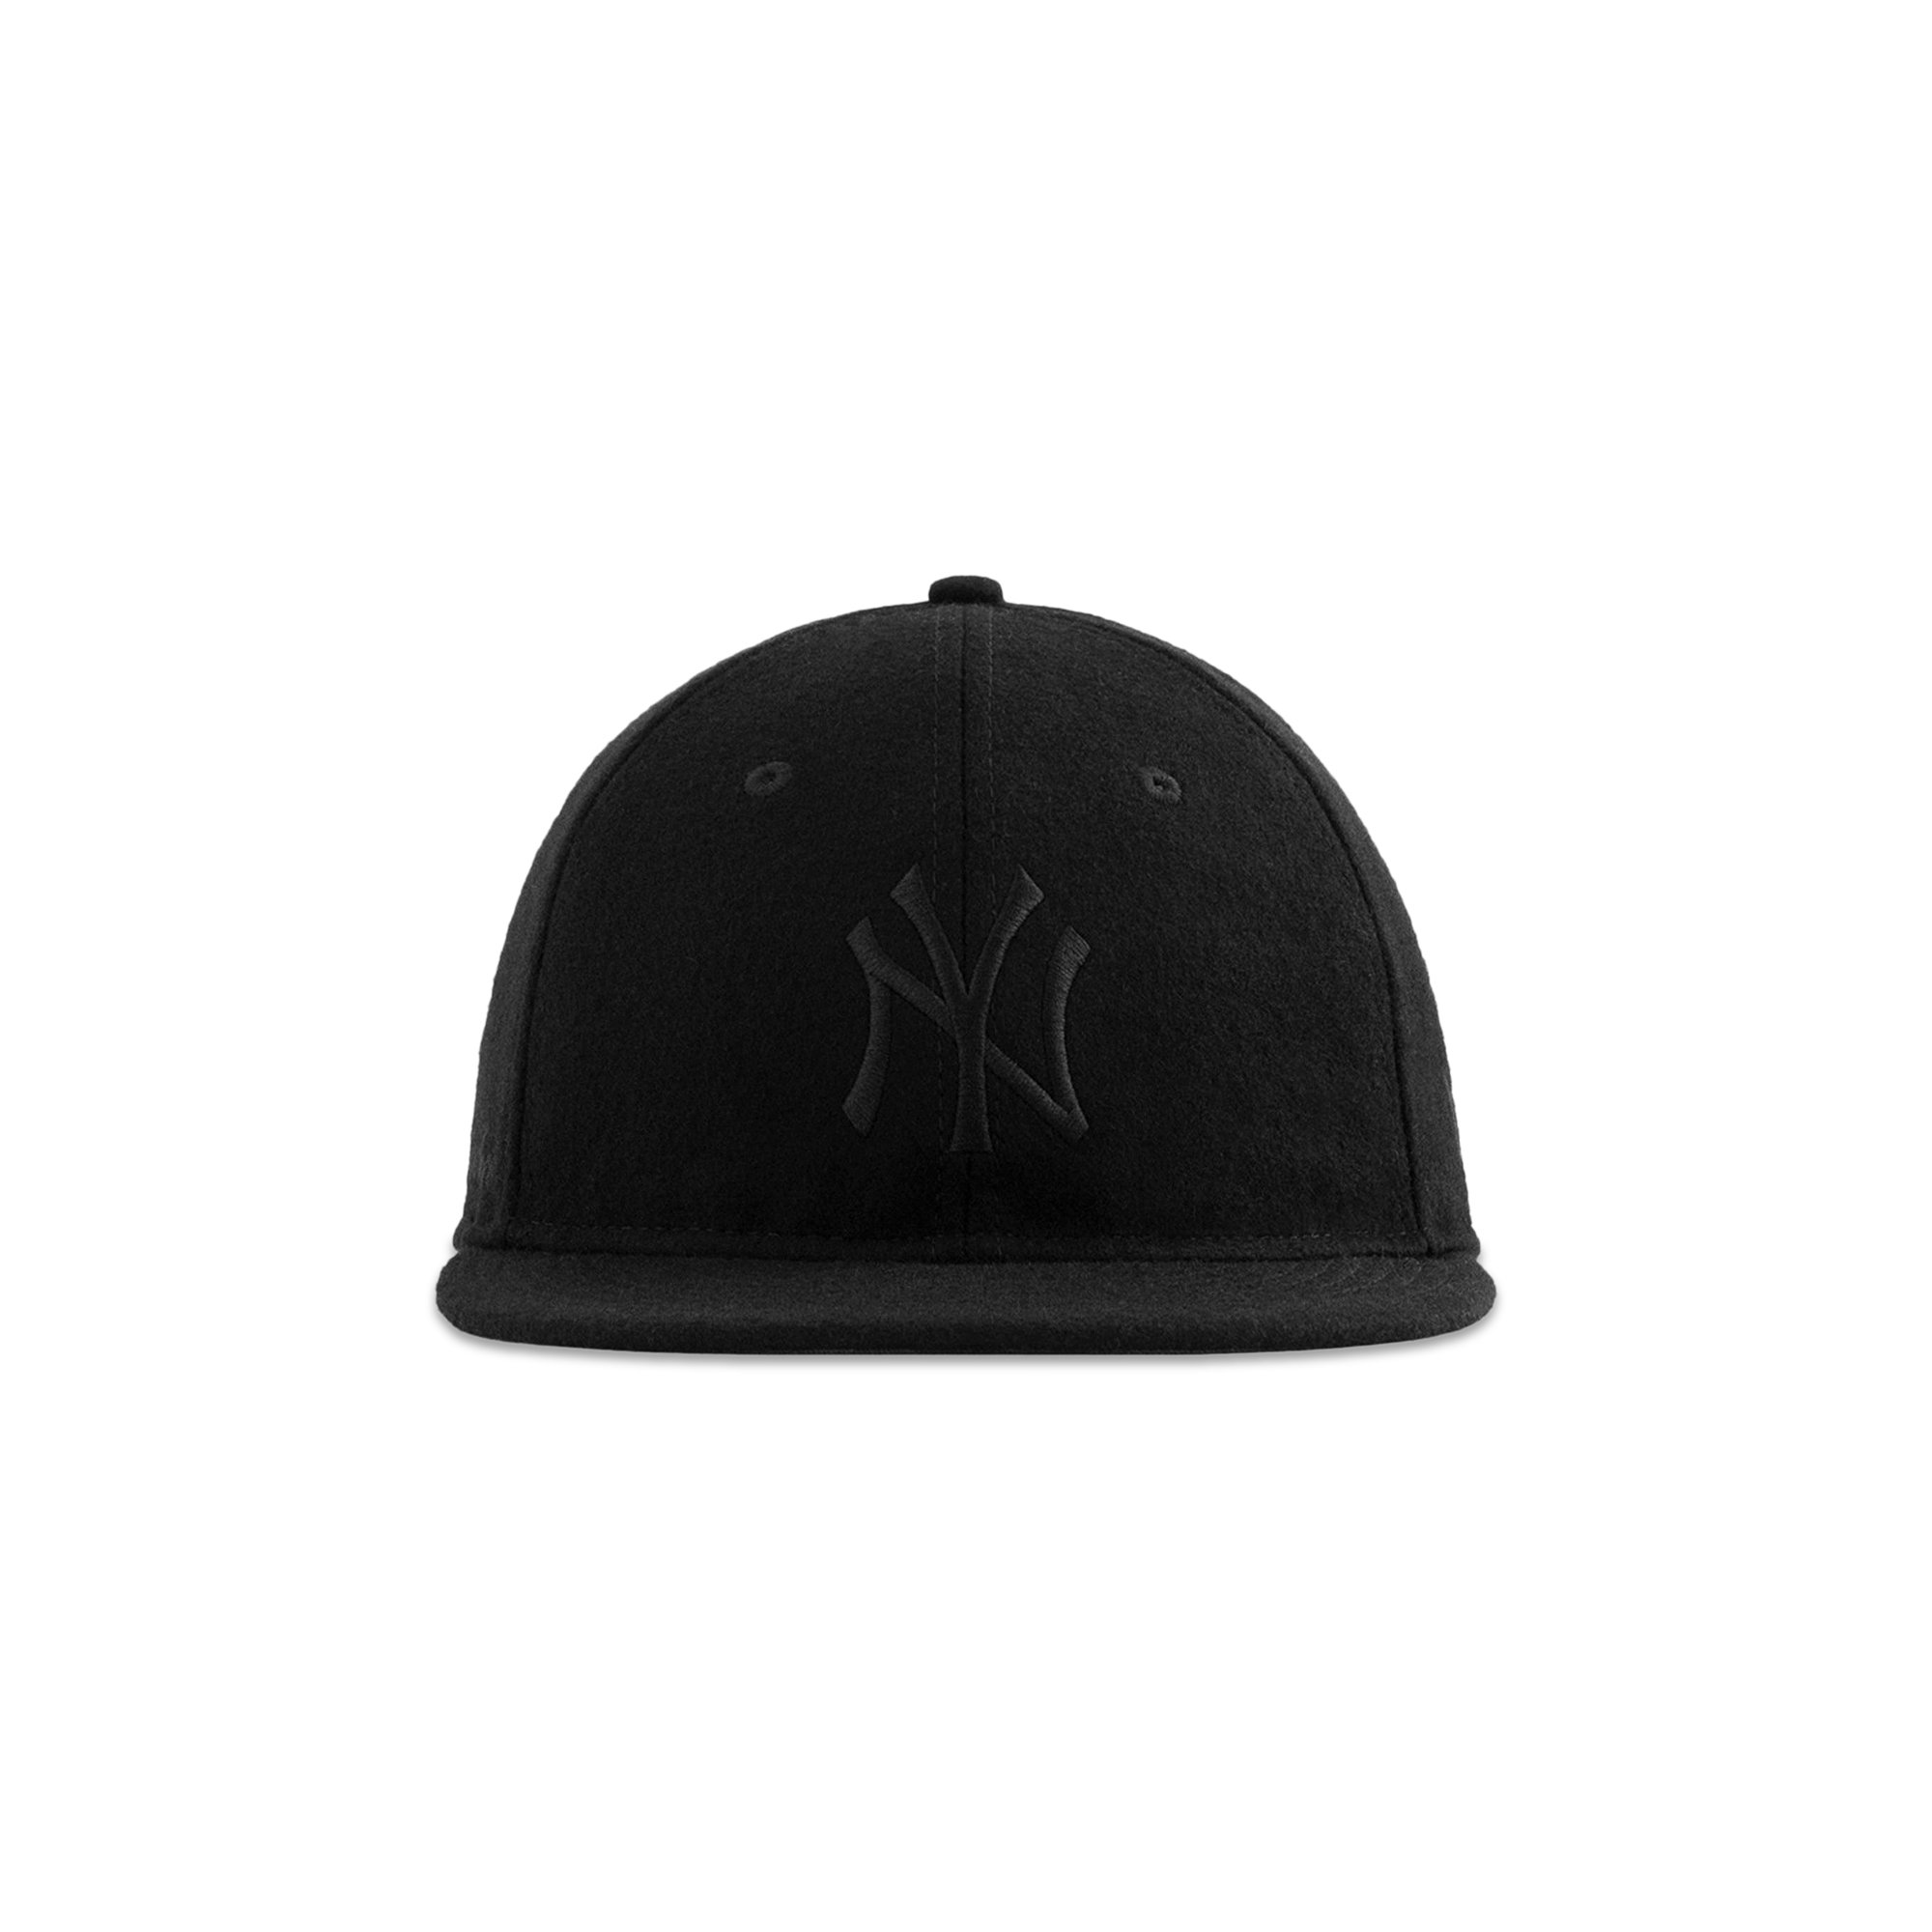 Aimé Leon Dore x New Era Tonal Wool Yankees Hat 'Black'